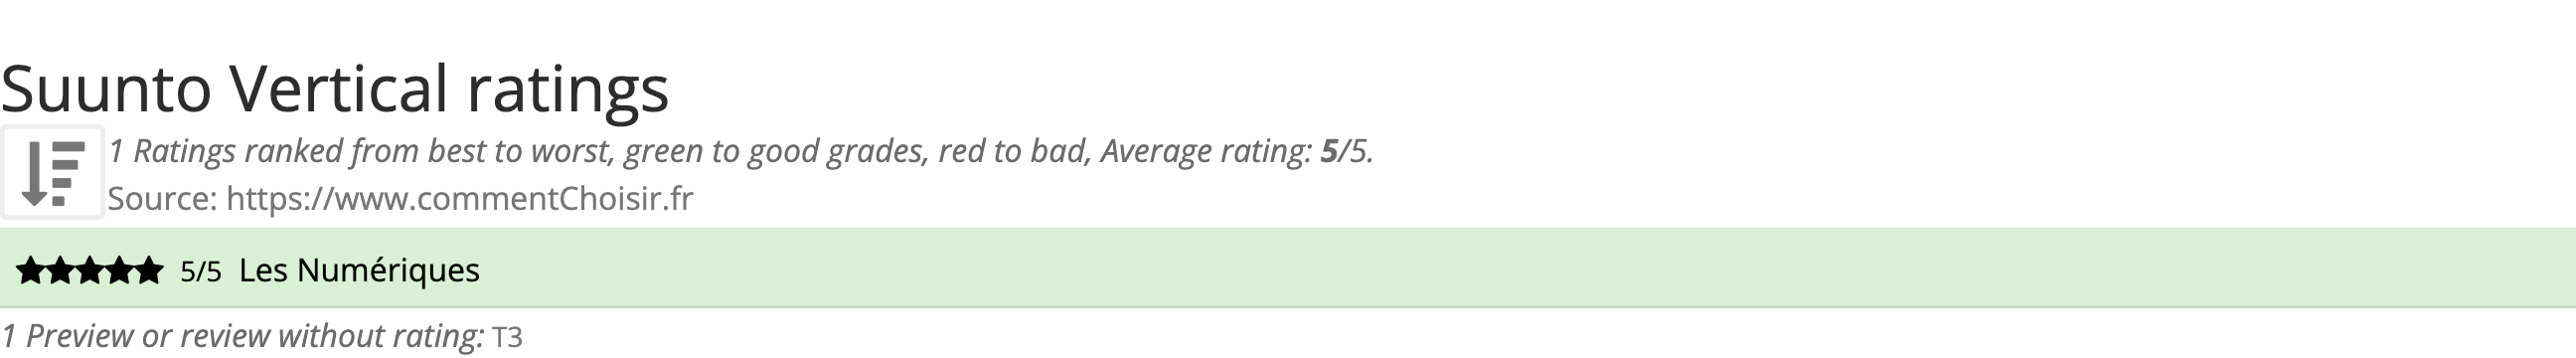 Ratings Suunto Vertical